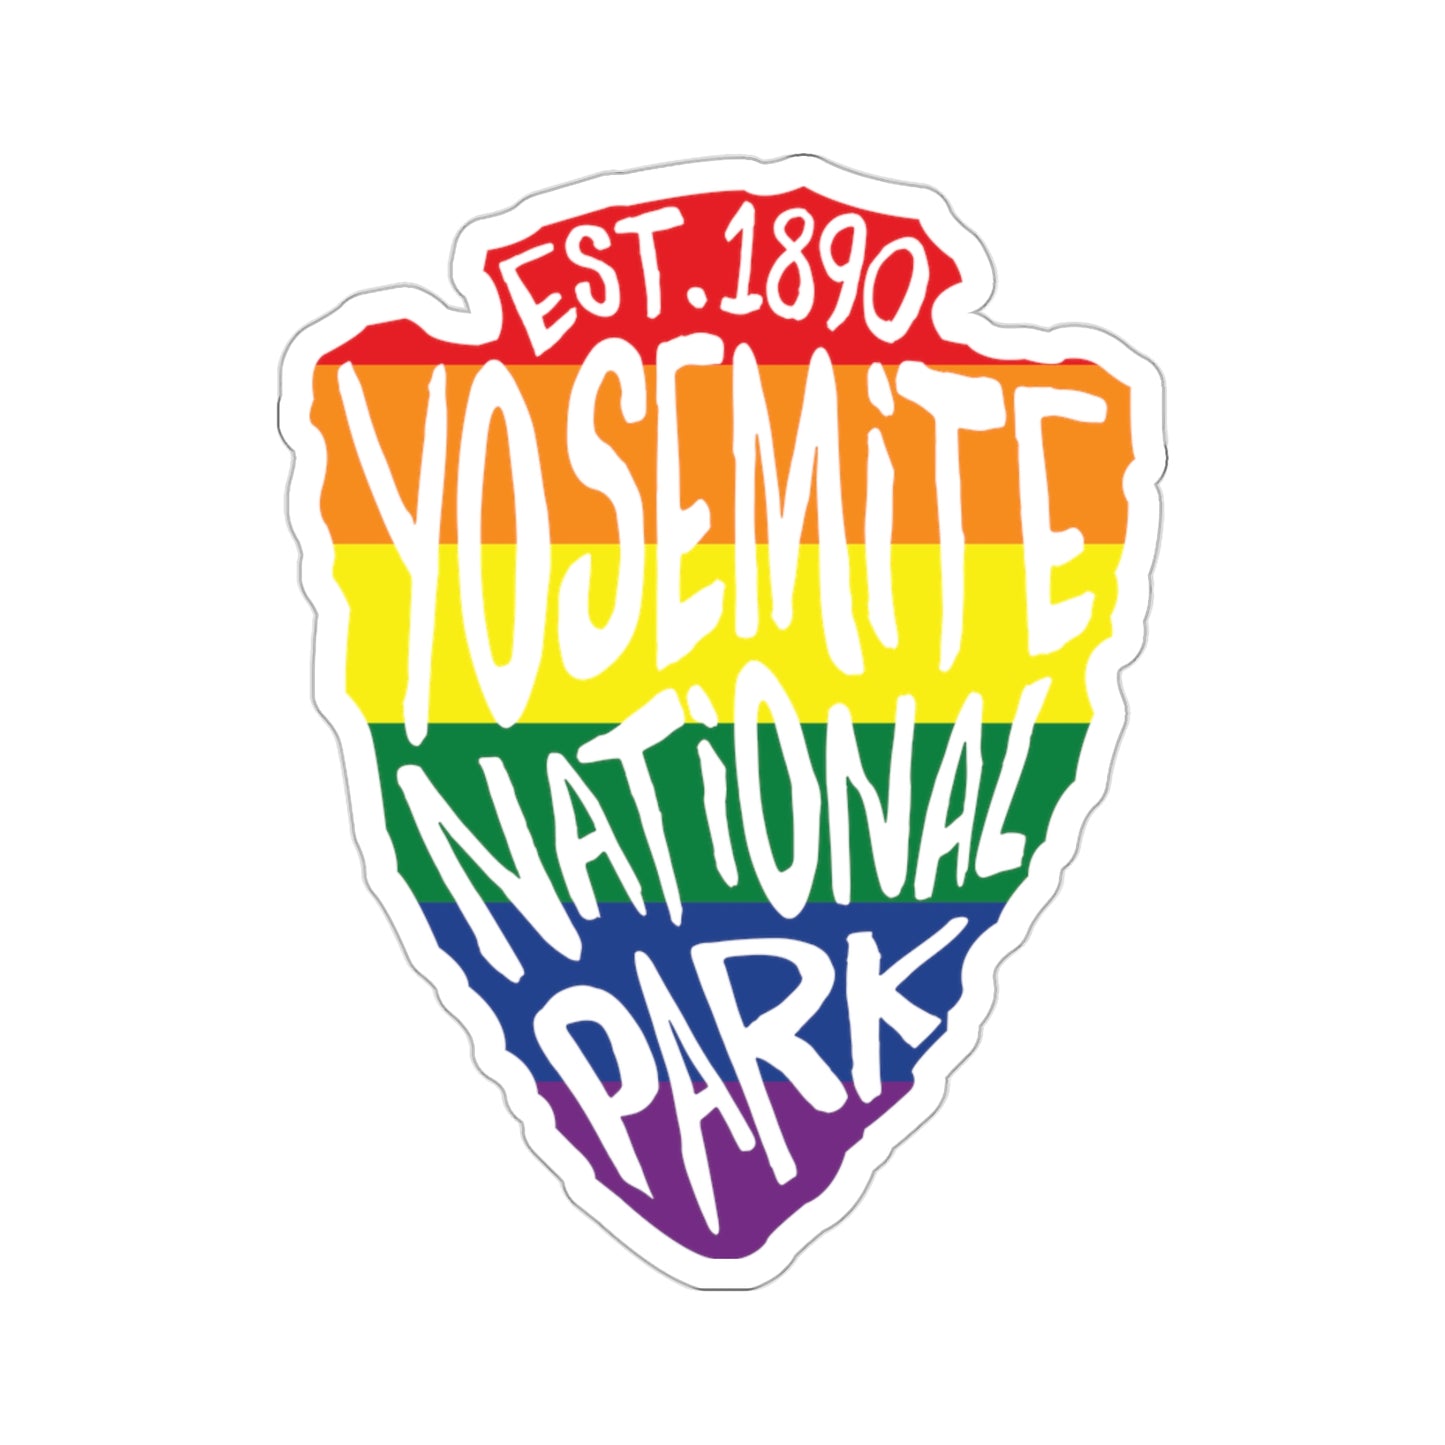 Yosemite National Park Sticker - Rainbow Arrow Head Design